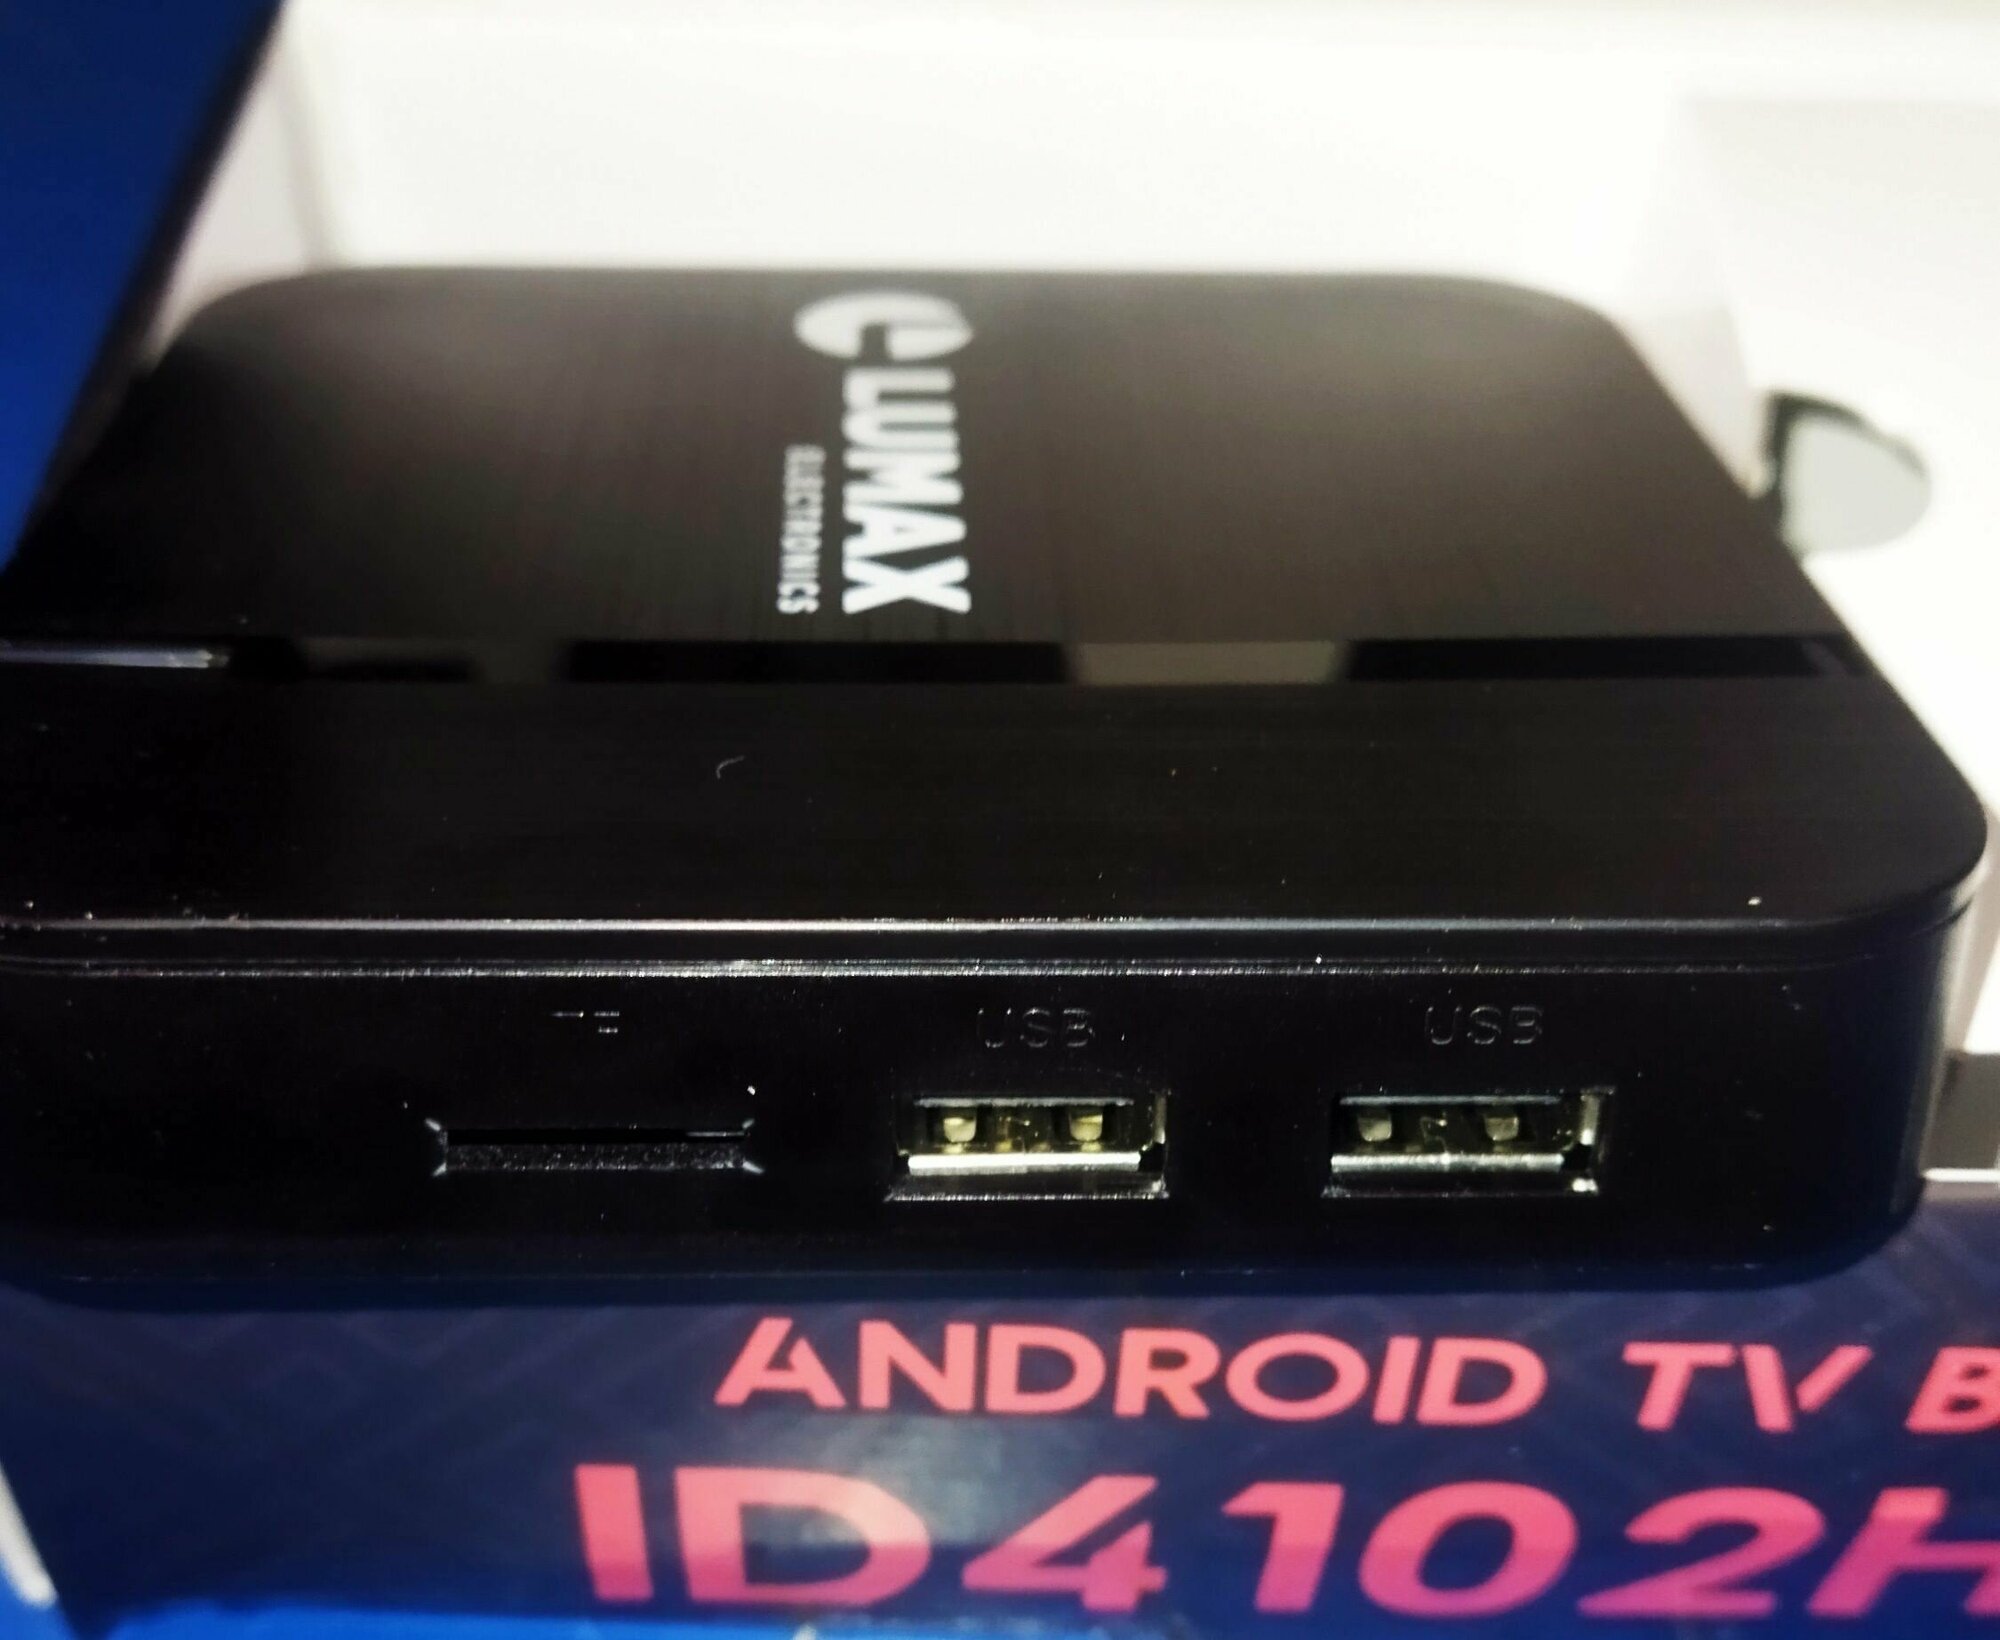 Mедиаплеер и Android Smart IPTV-приставка Lumax ID4102HD